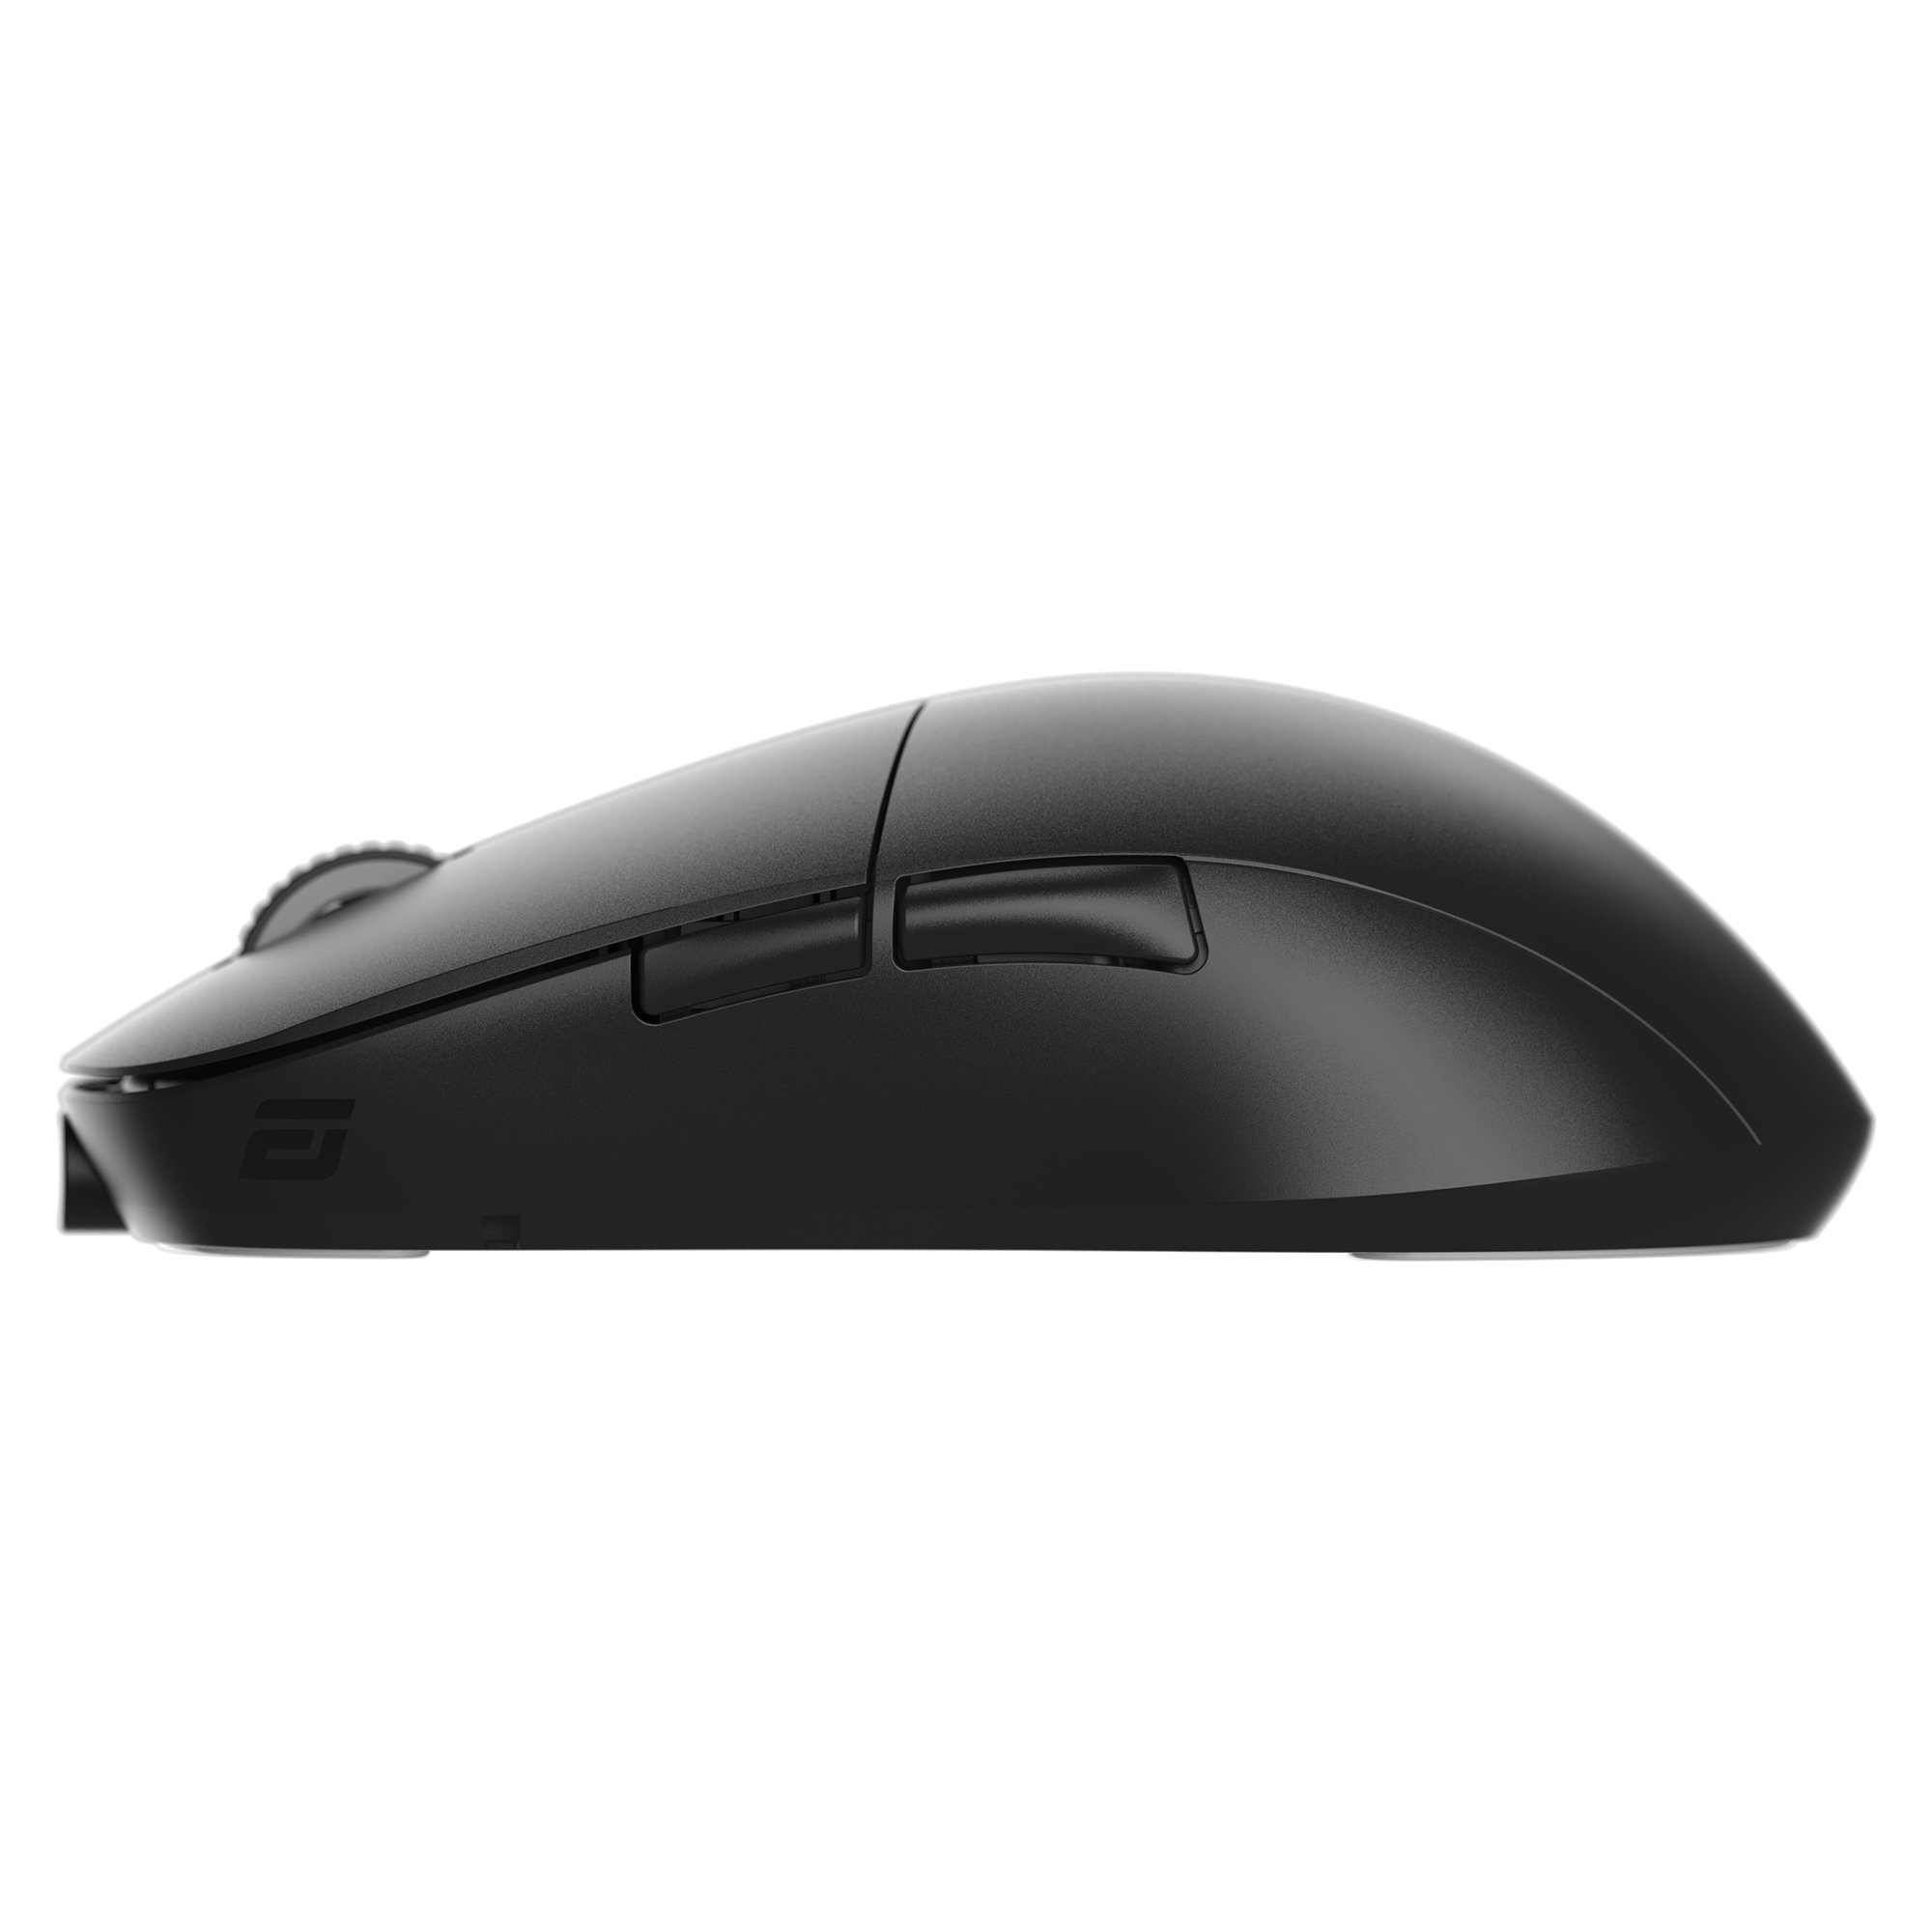 Endgame Gear XM2we mouse